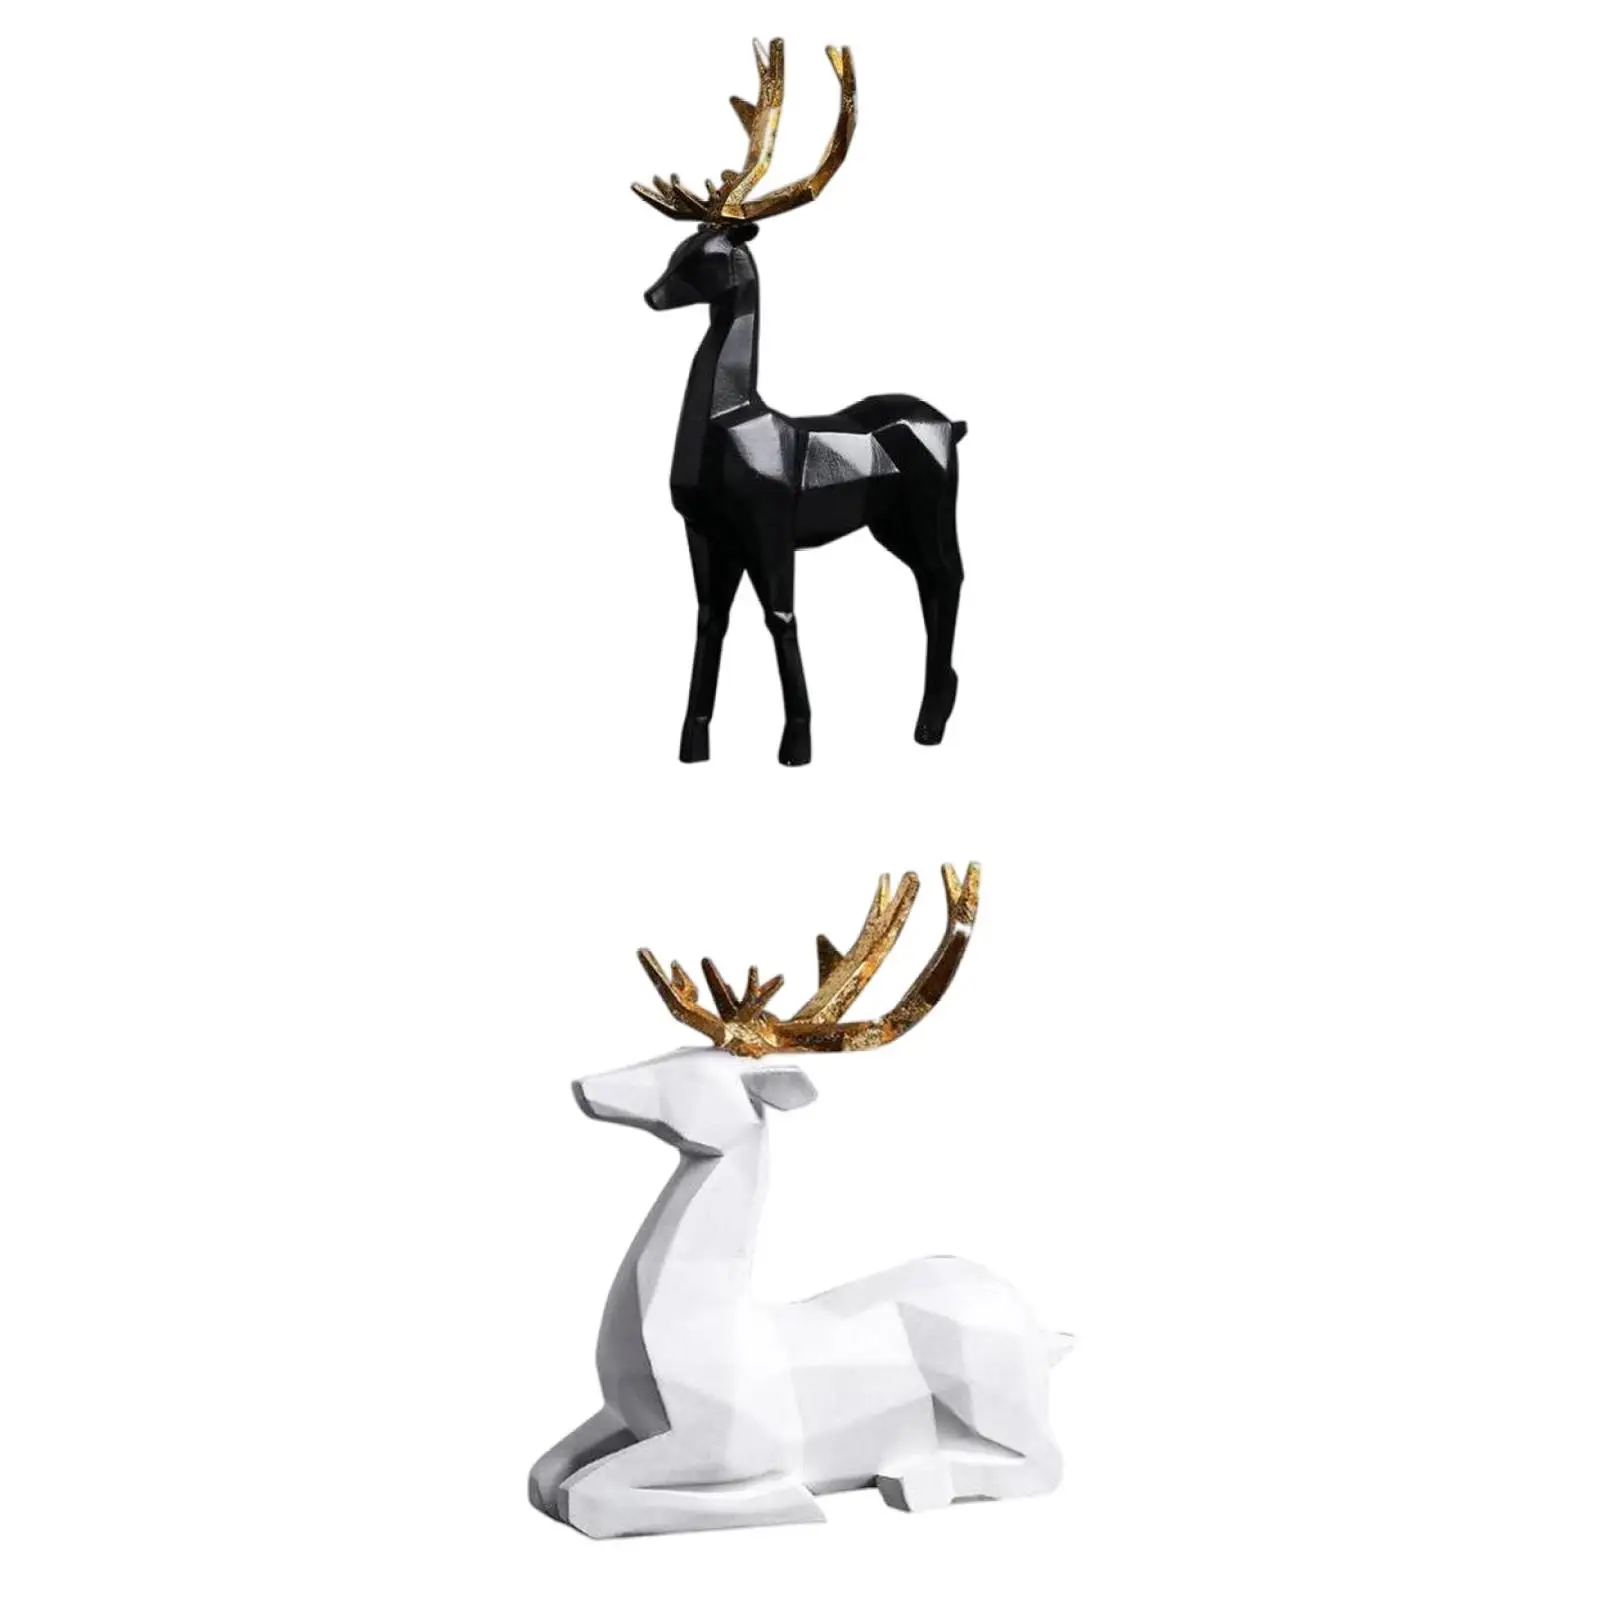 2x Art Elk Sculpture Animal Ornament Figurine Statue Photo Props Decor 